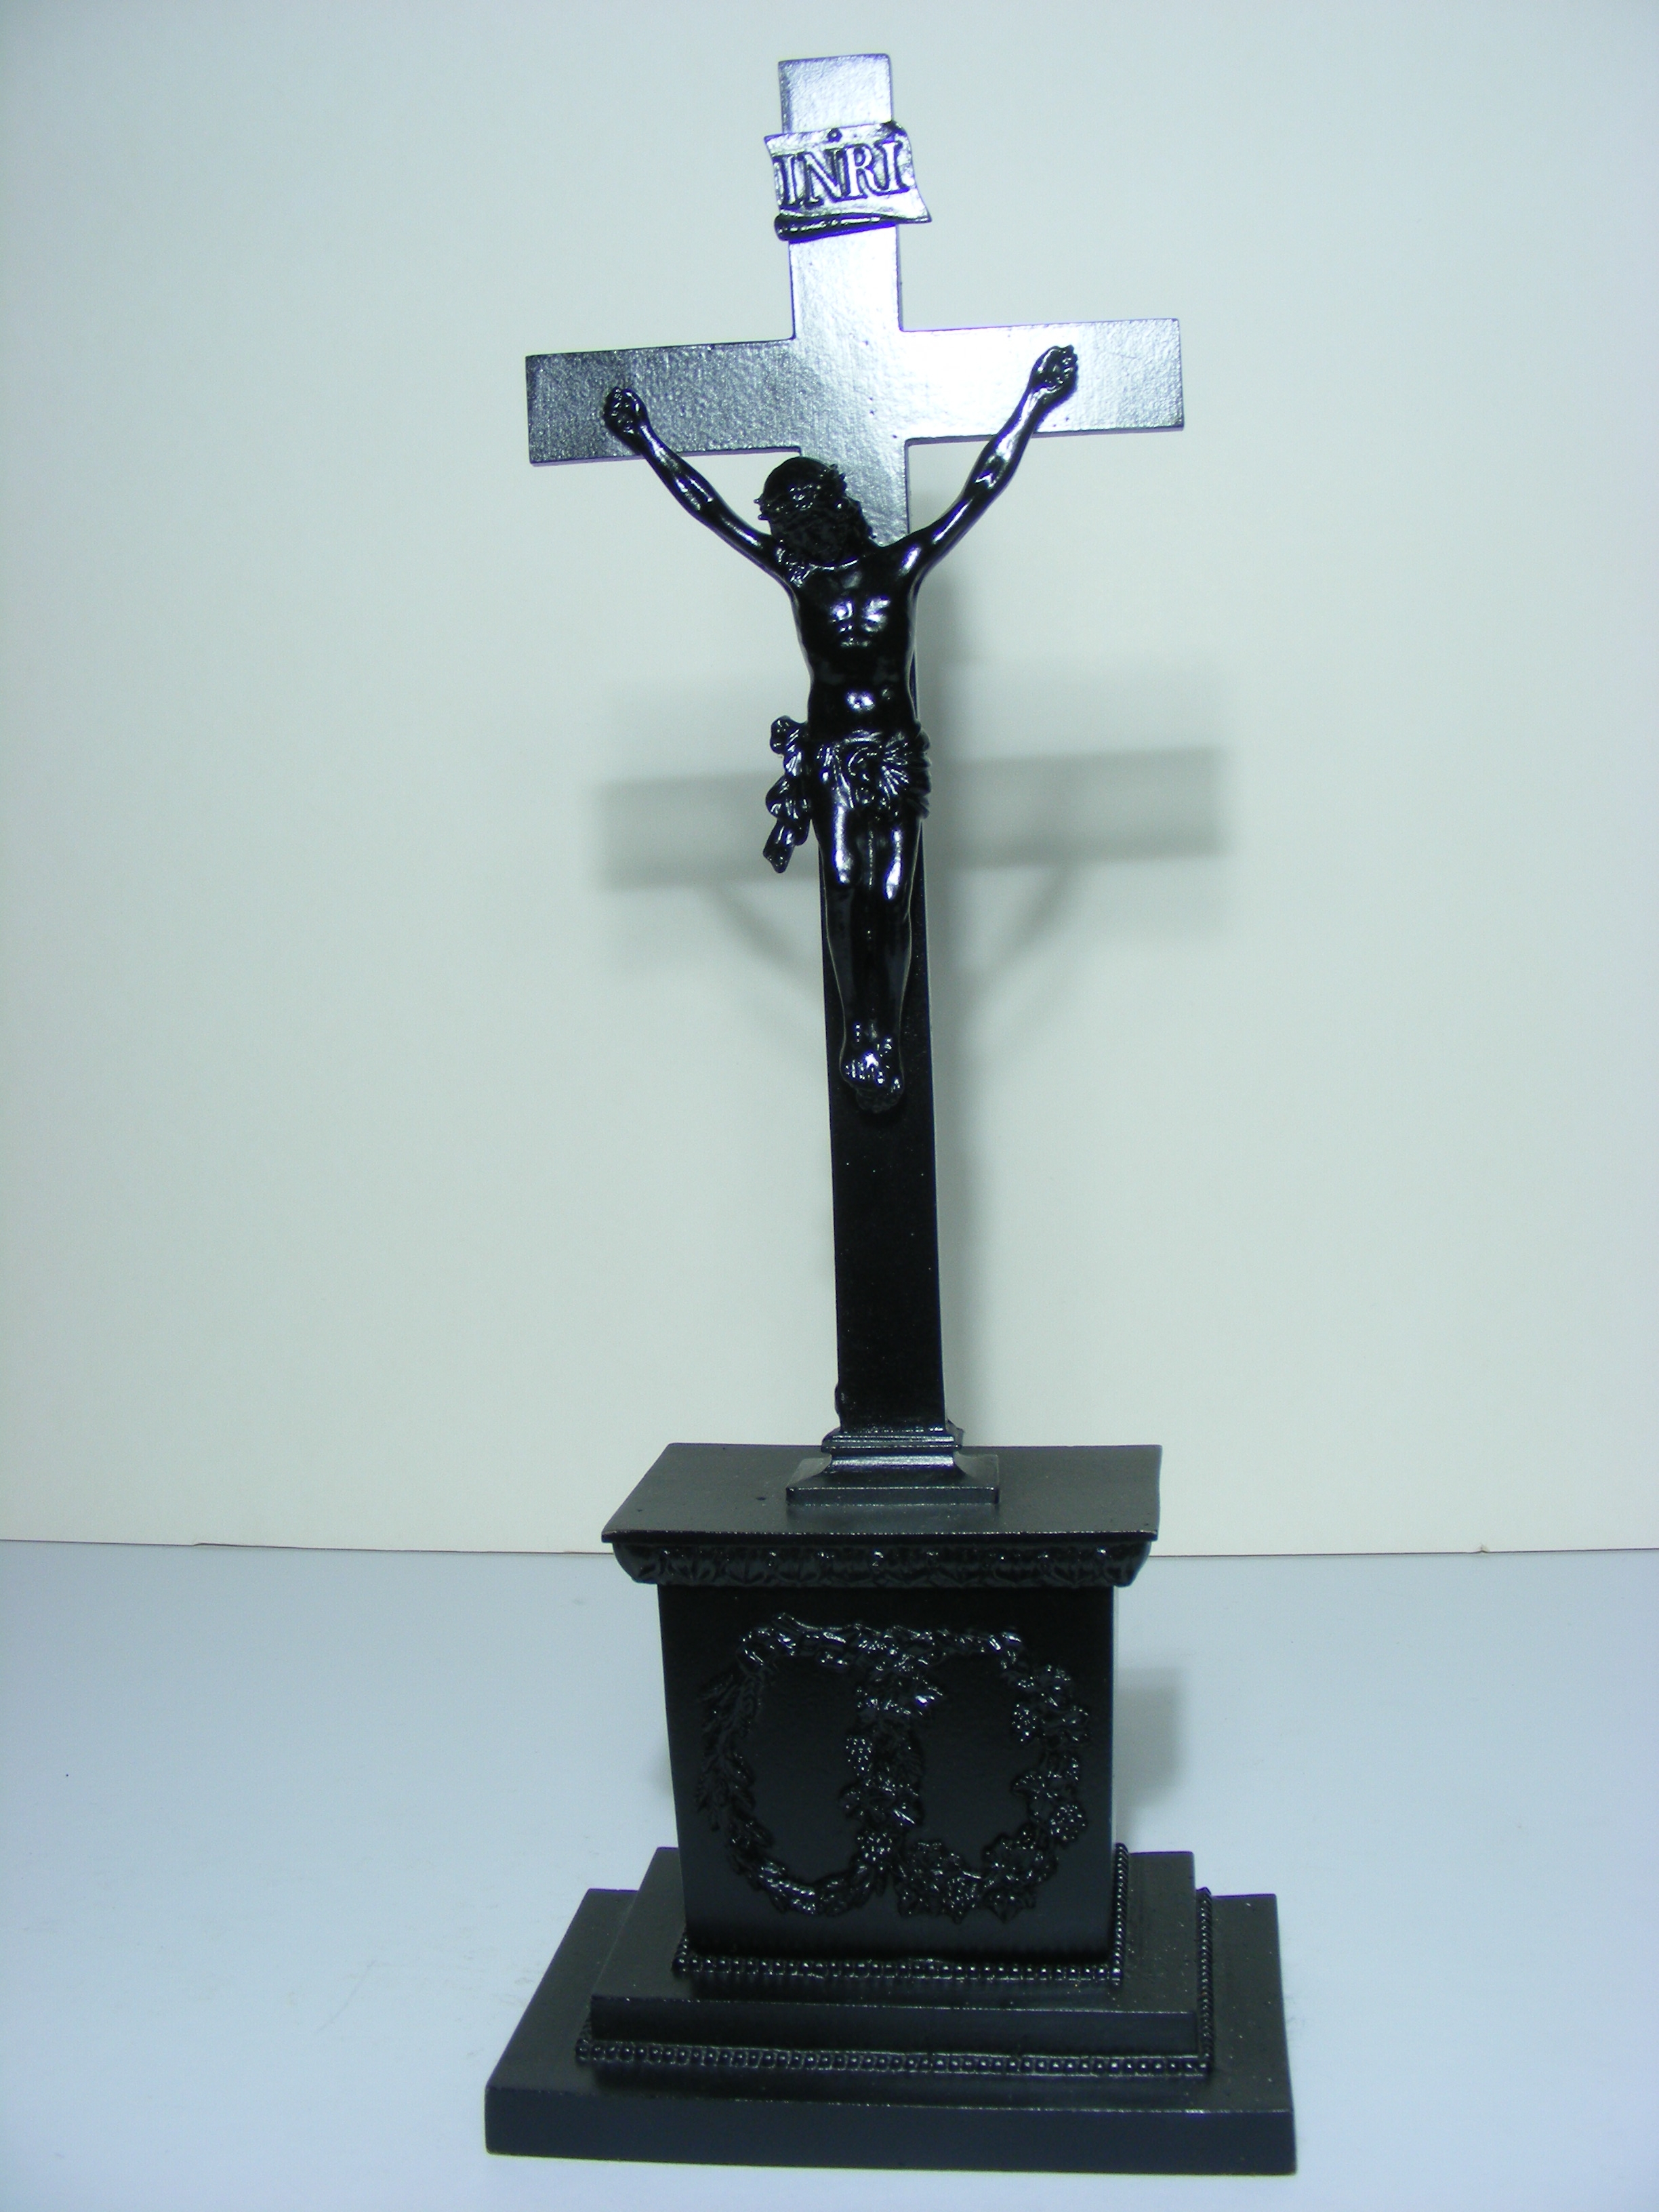 Altarkreuz mit Corpus Christi (REM CC BY-NC-SA)